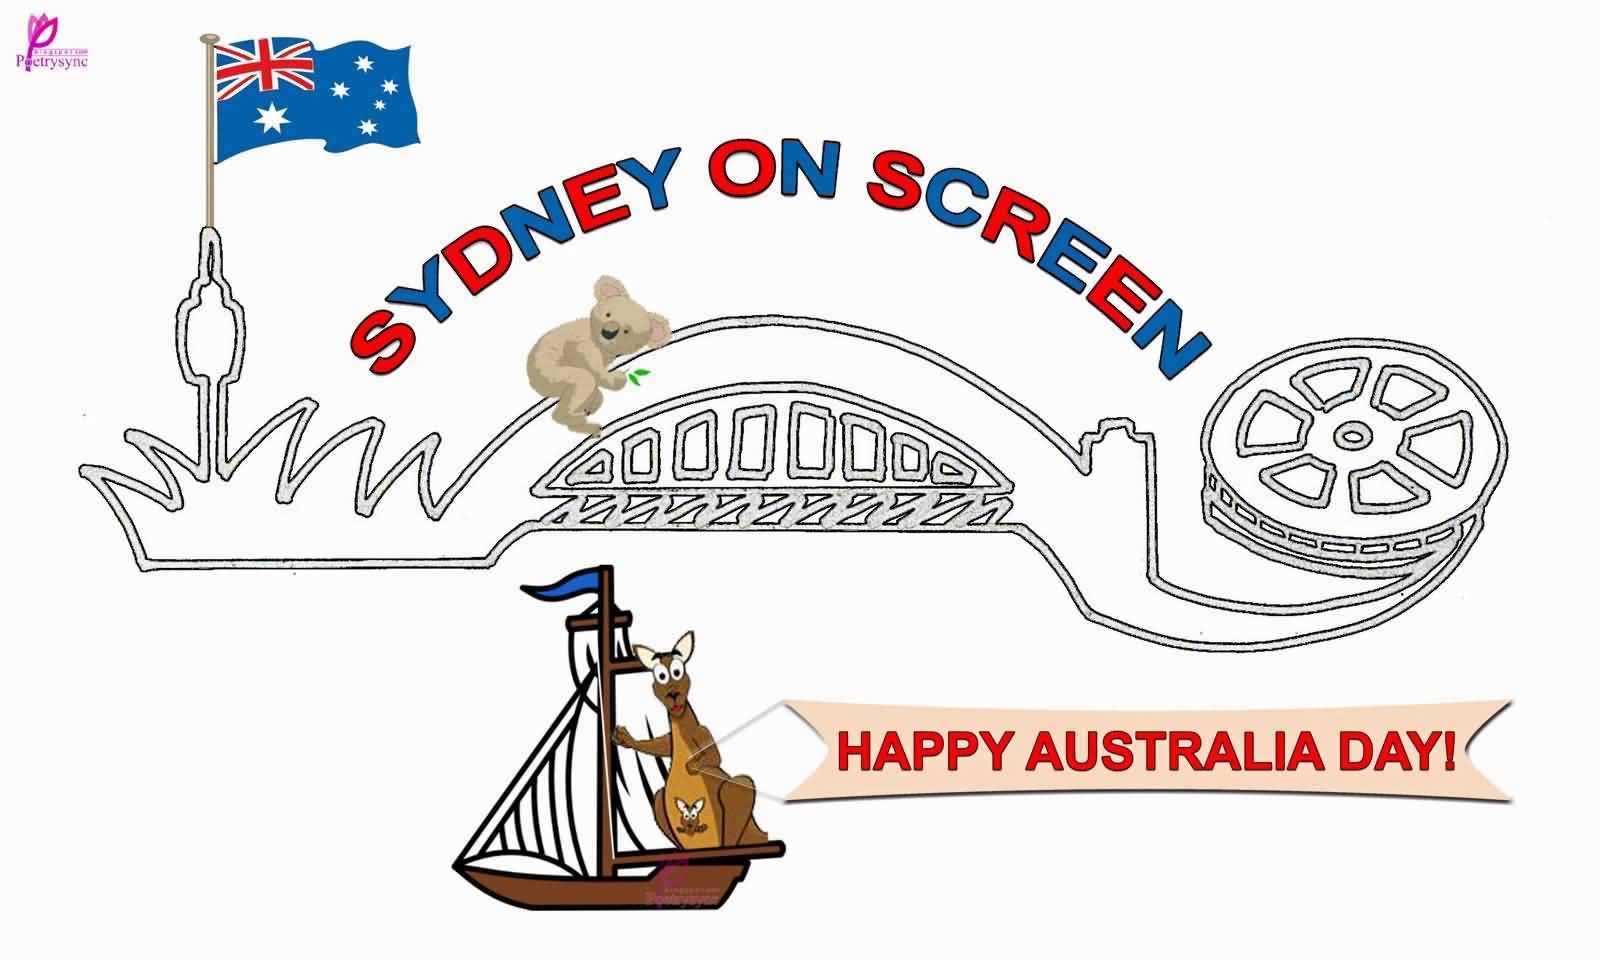 Sydney On Screen Happy Australia Day